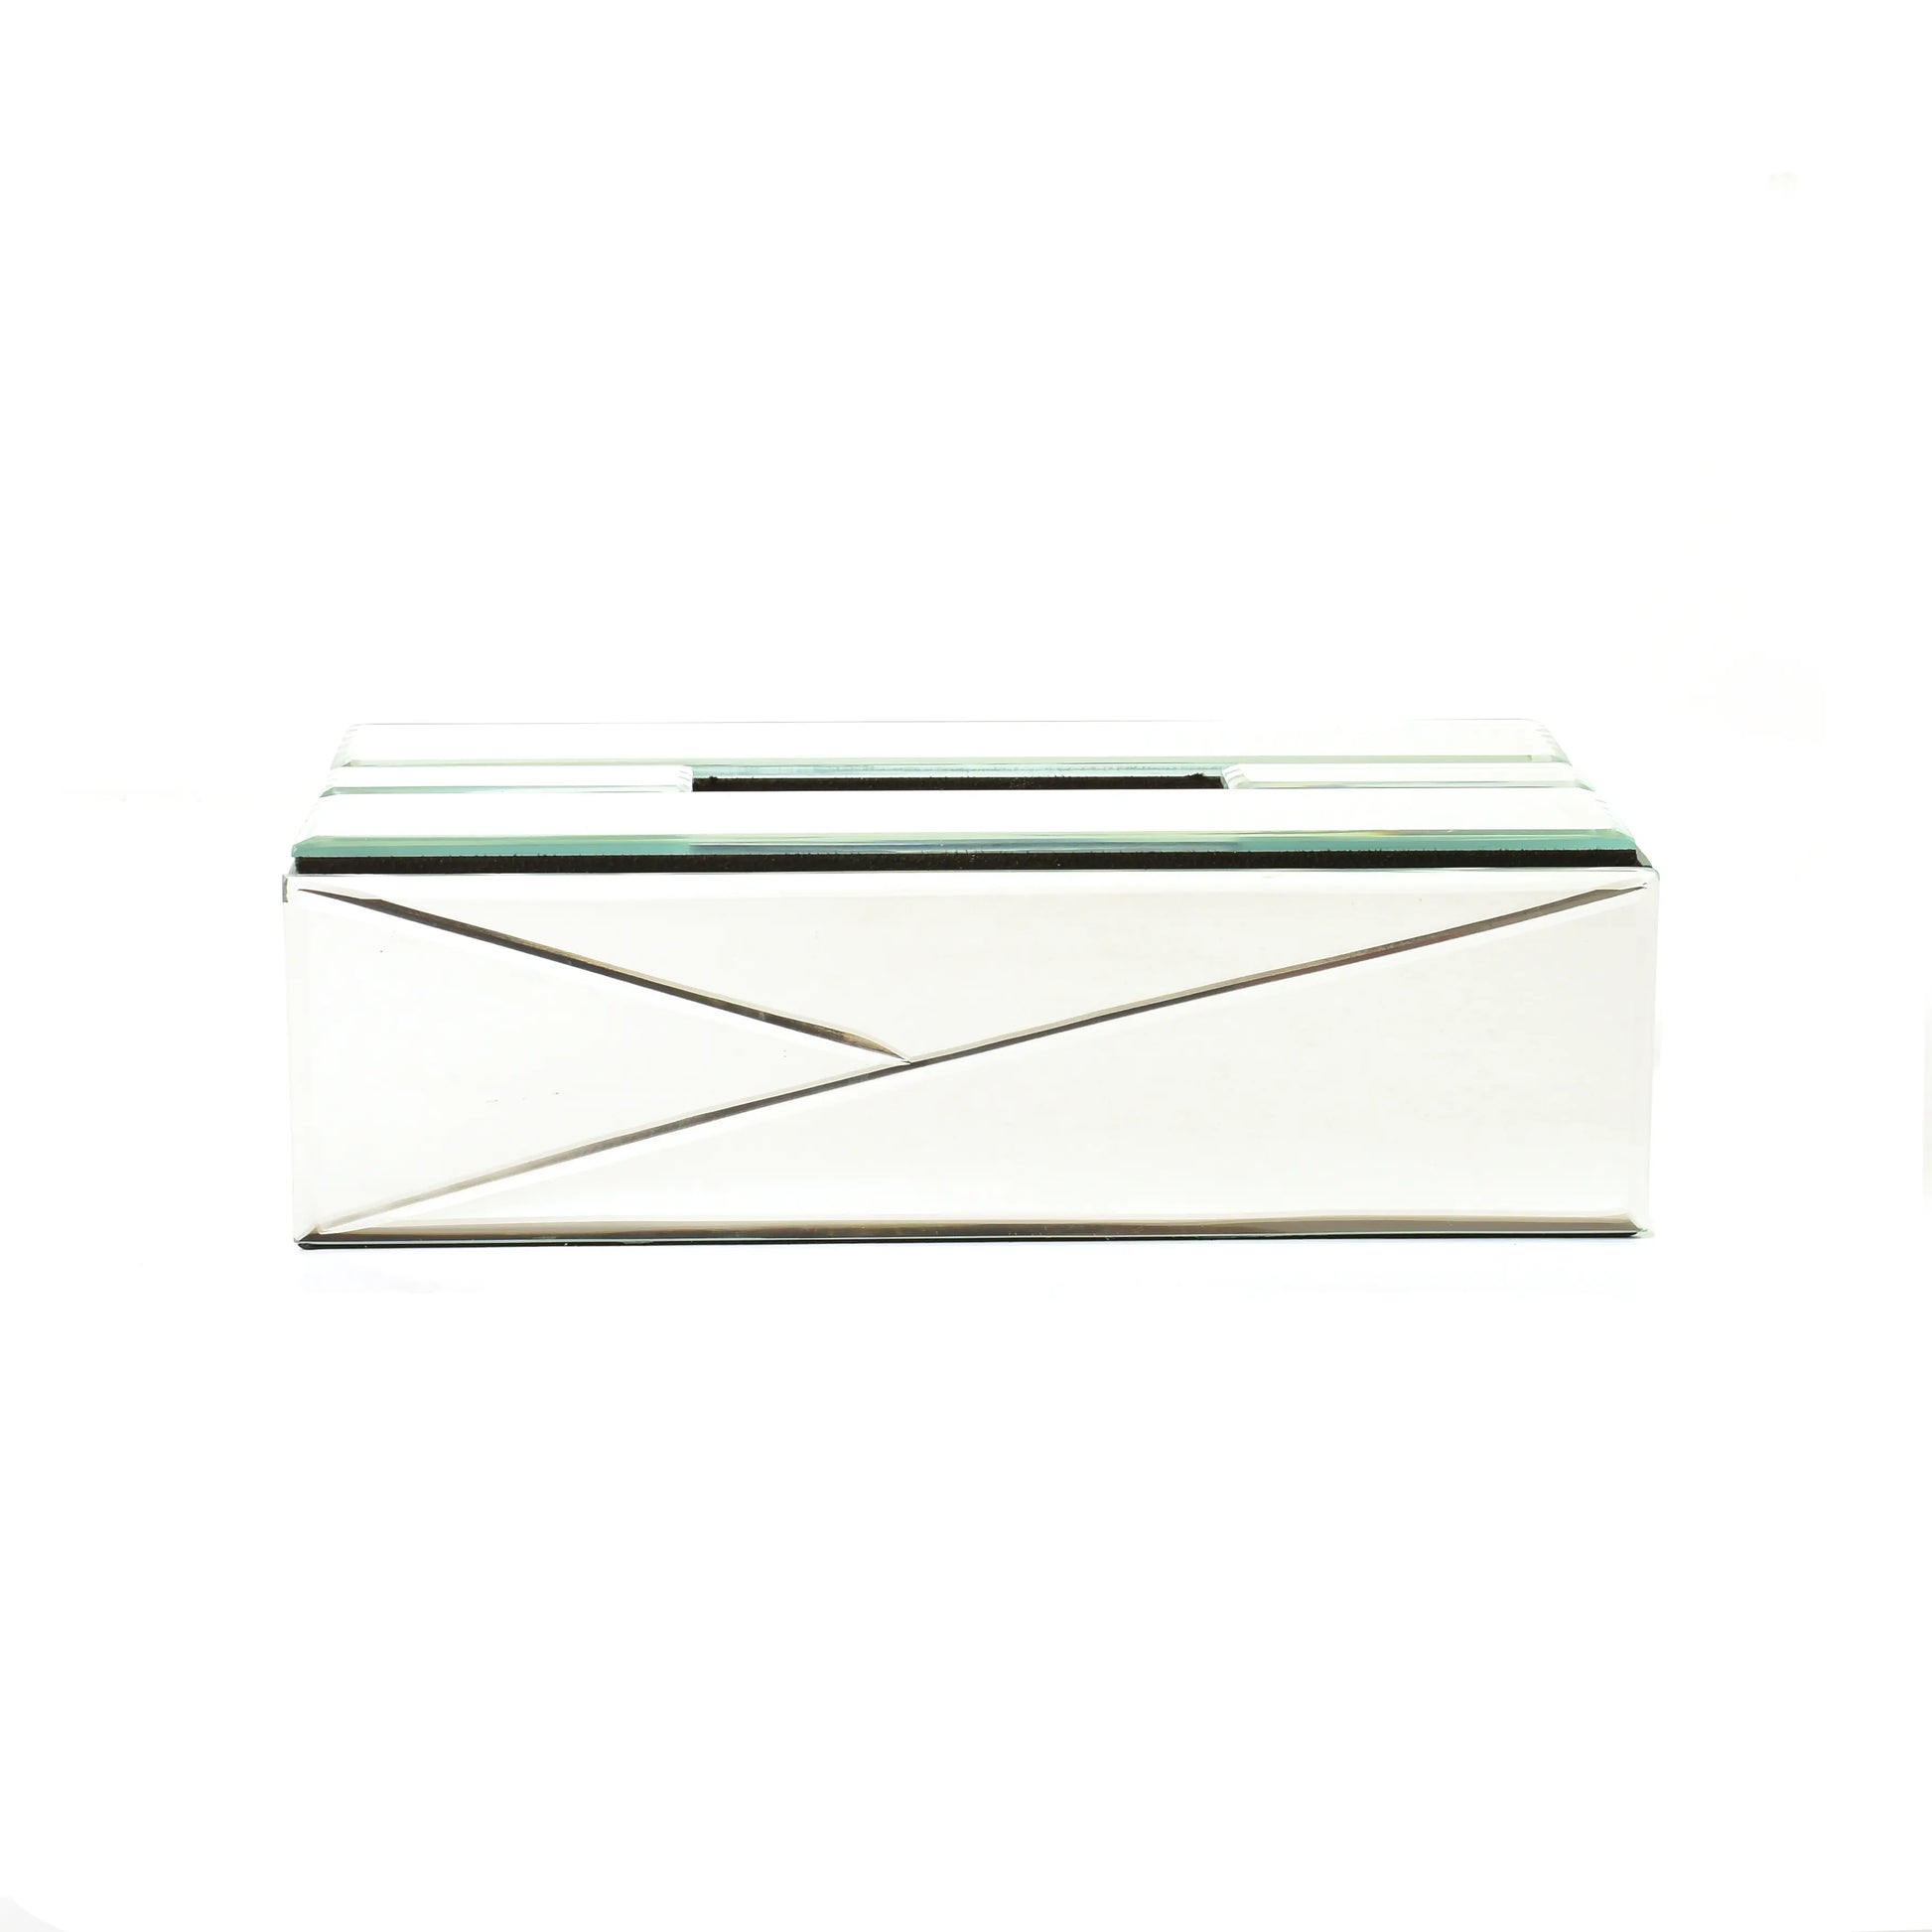 Mirror Rectangle Tissue Box Holder | Clear | Lap Of Luxury Ichkan